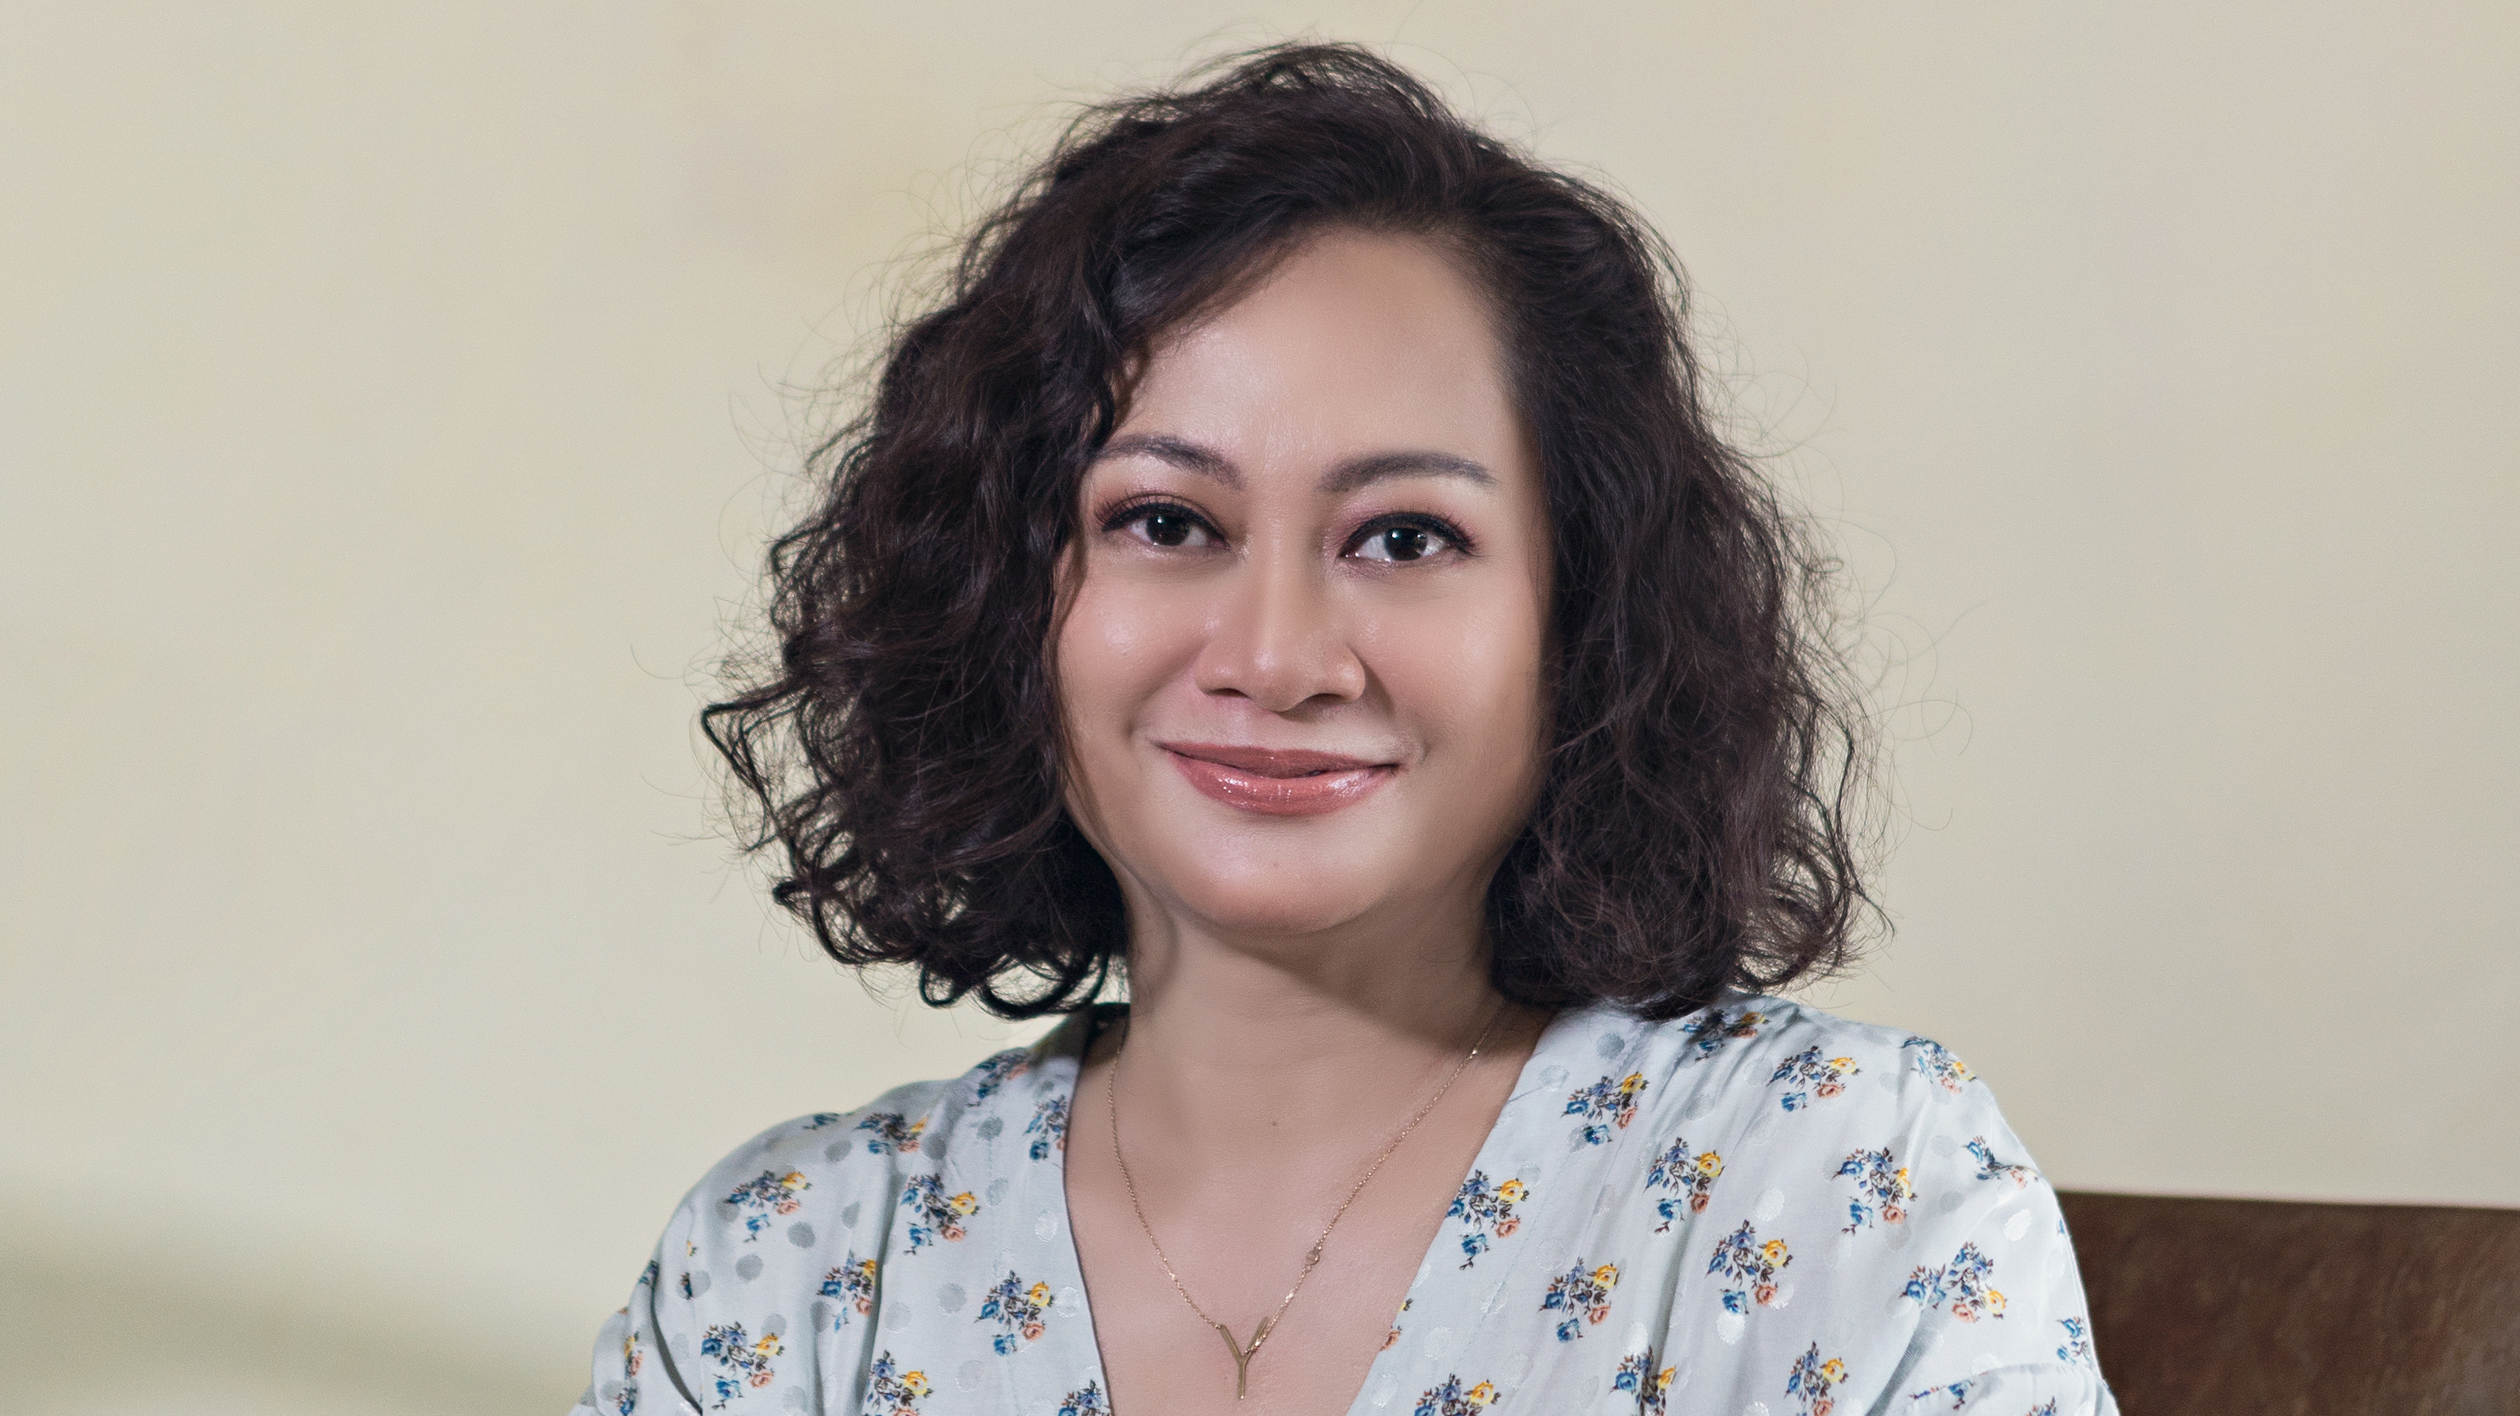 Yendi Amalia, a woman entrepreneur from Indonesia